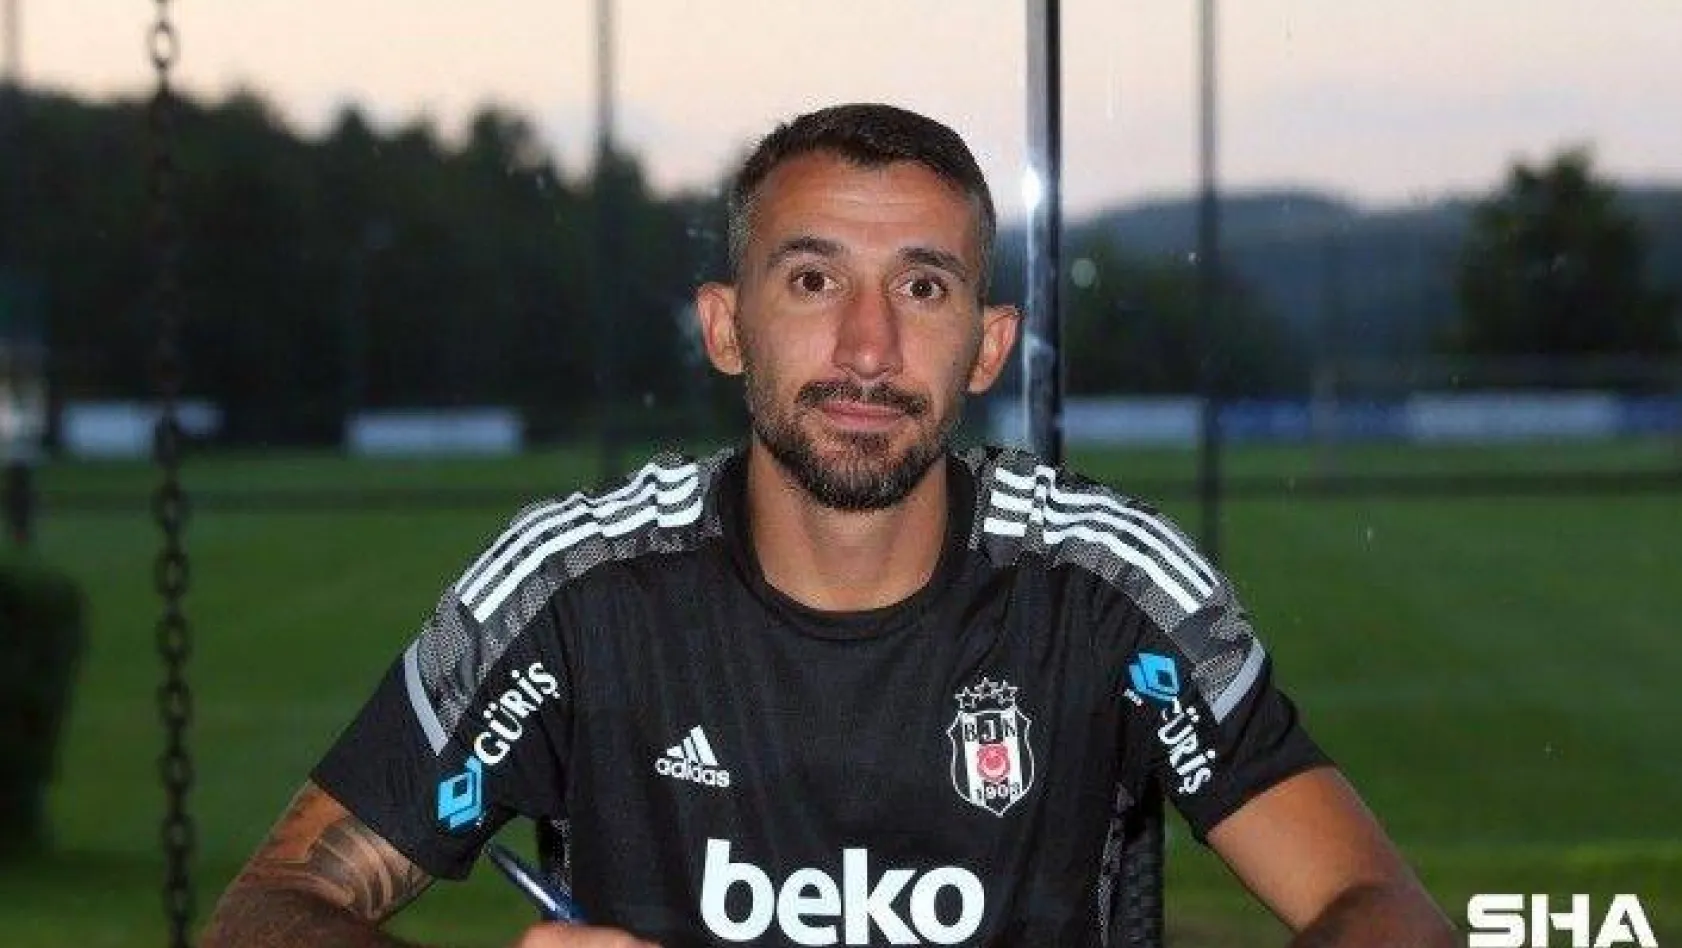 Mehmet Topal Beşiktaş'ta